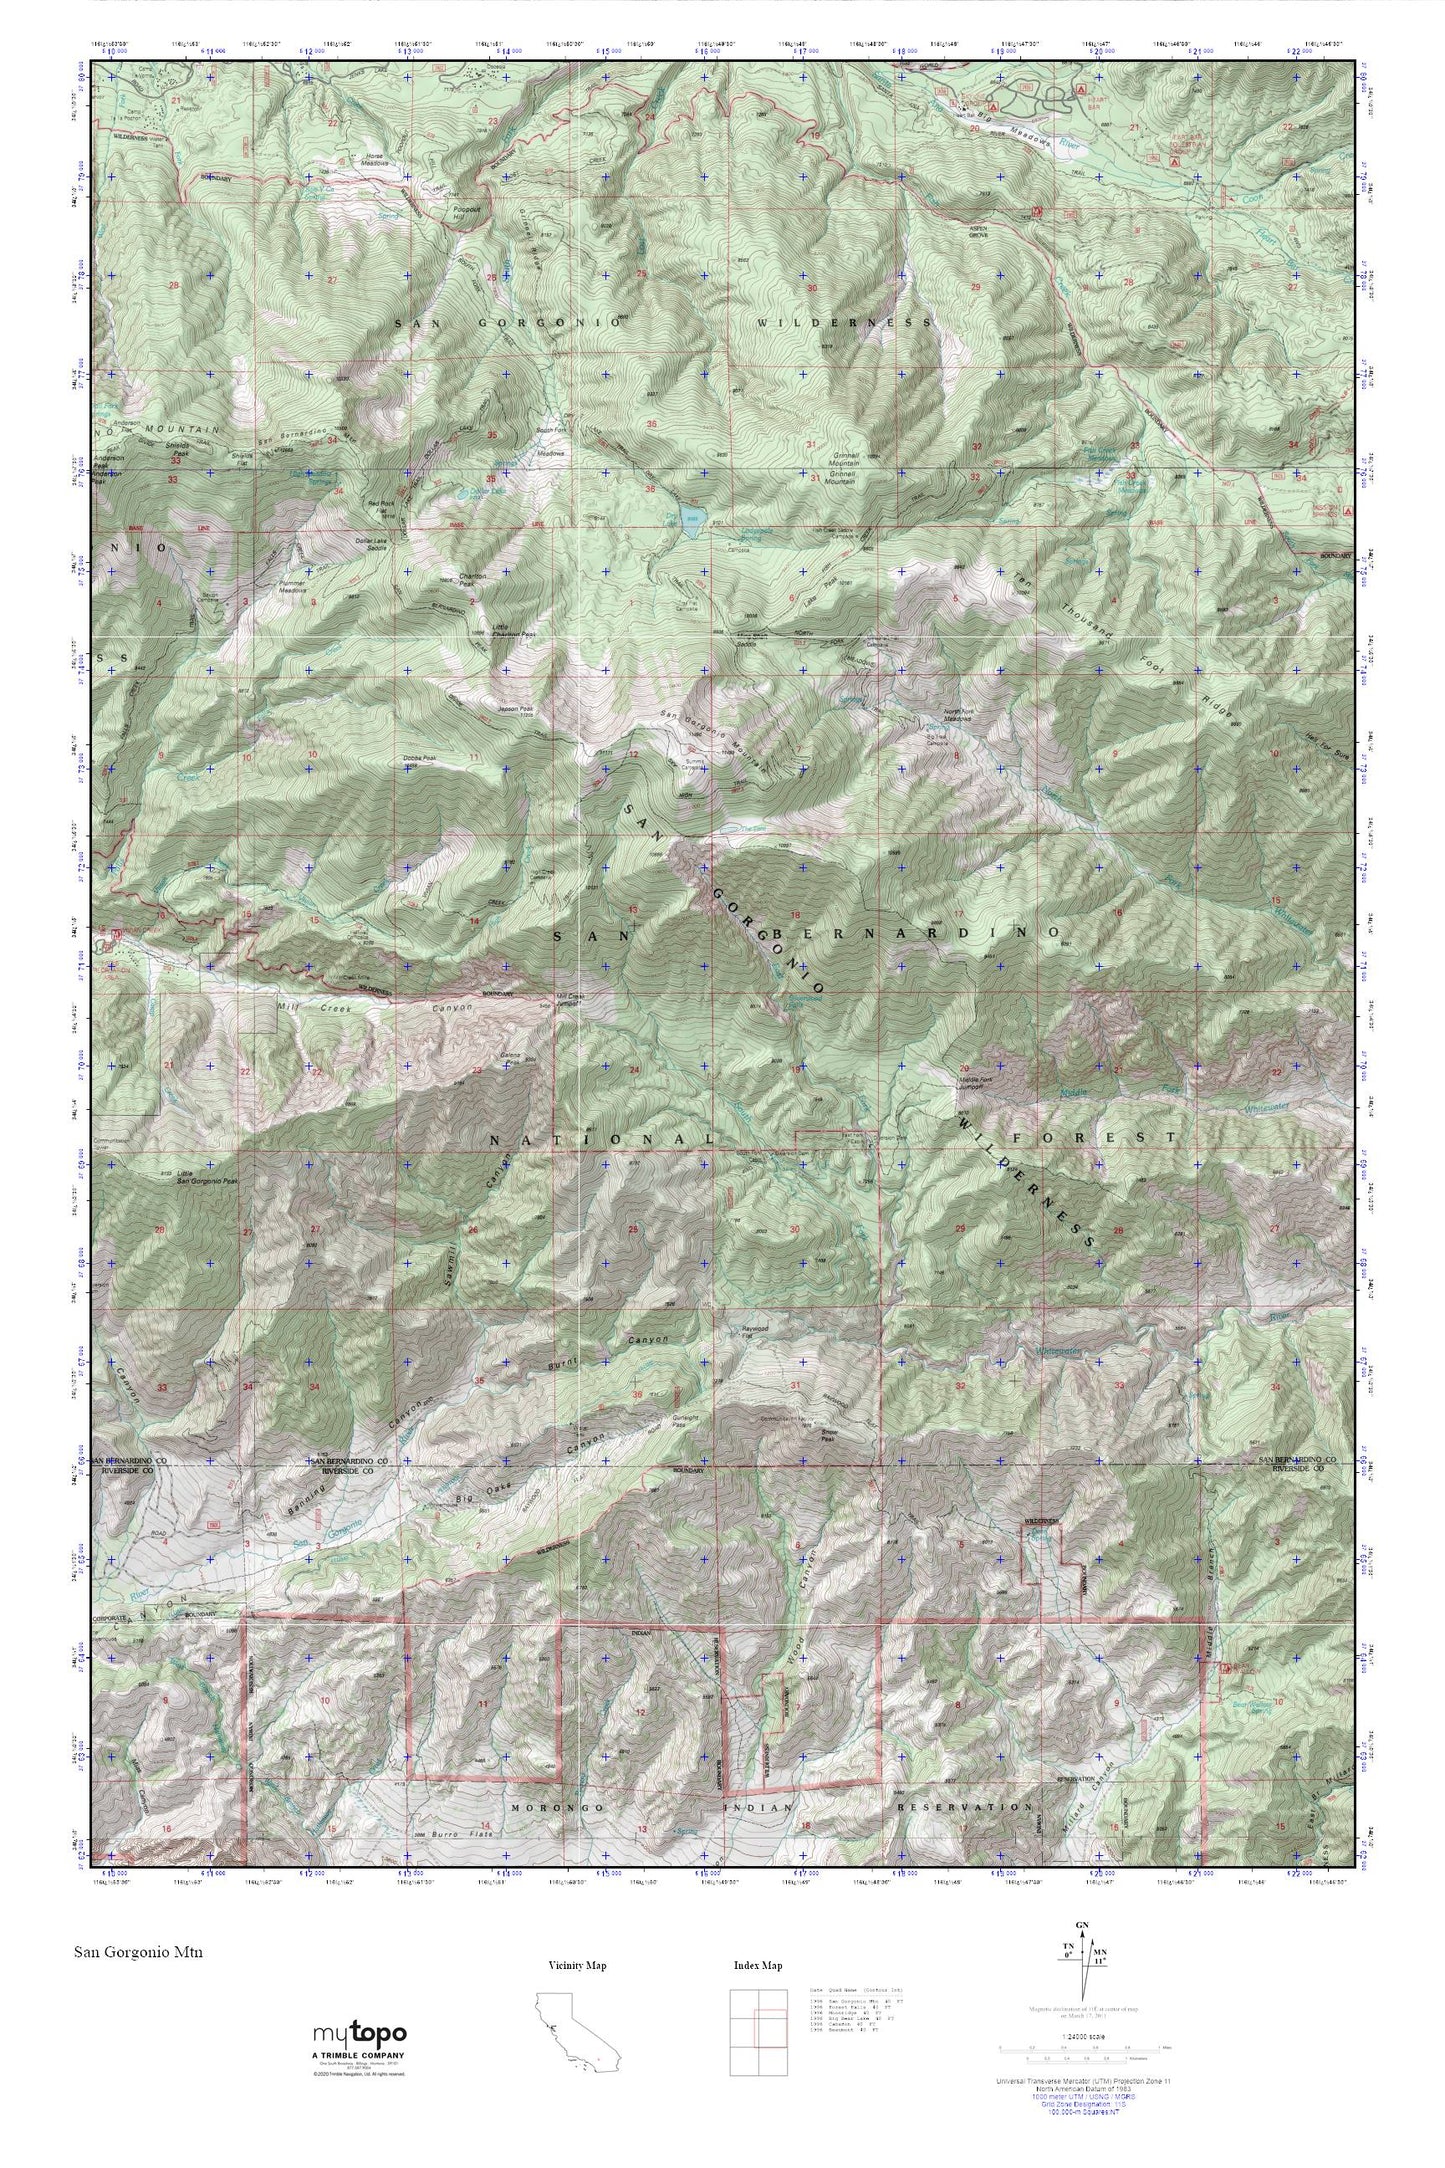 San Georgonio Mtn MyTopo Explorer Series Map Image